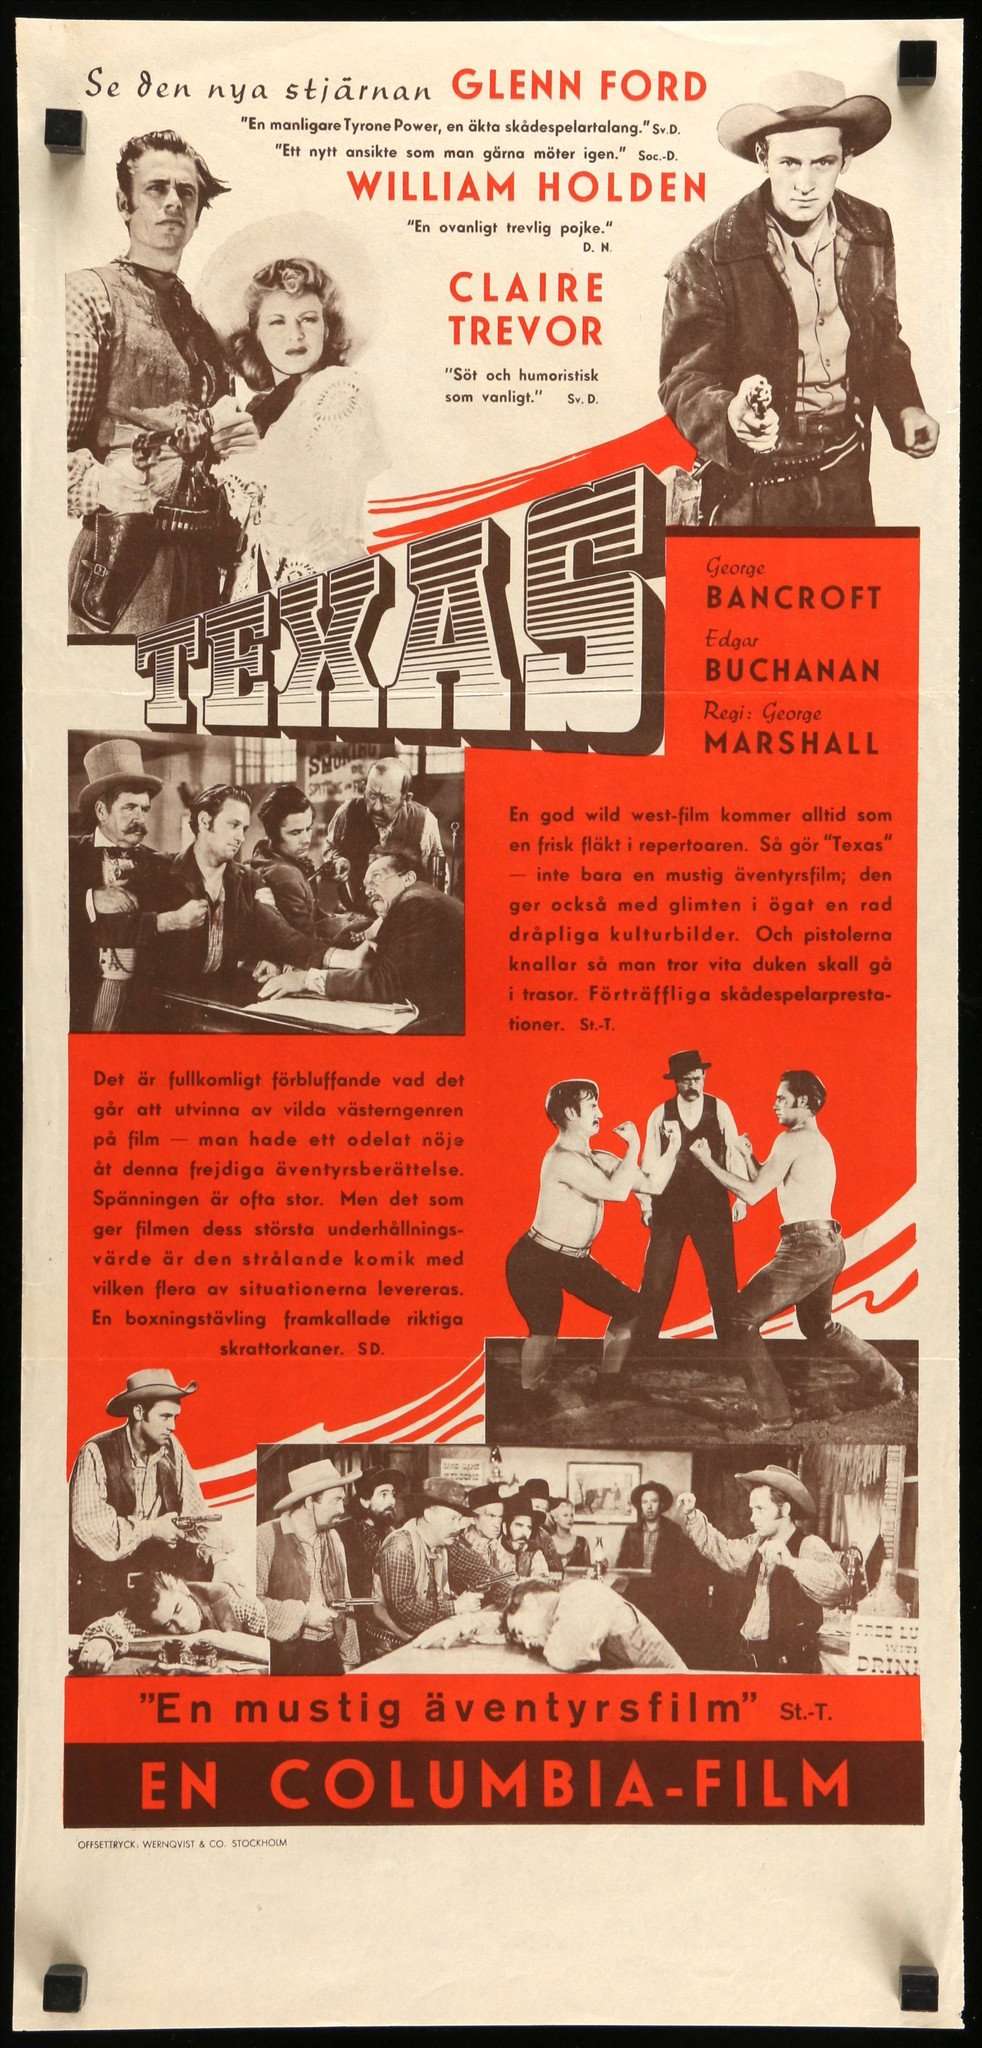 Texas (1941) original movie poster for sale at Original Film Art